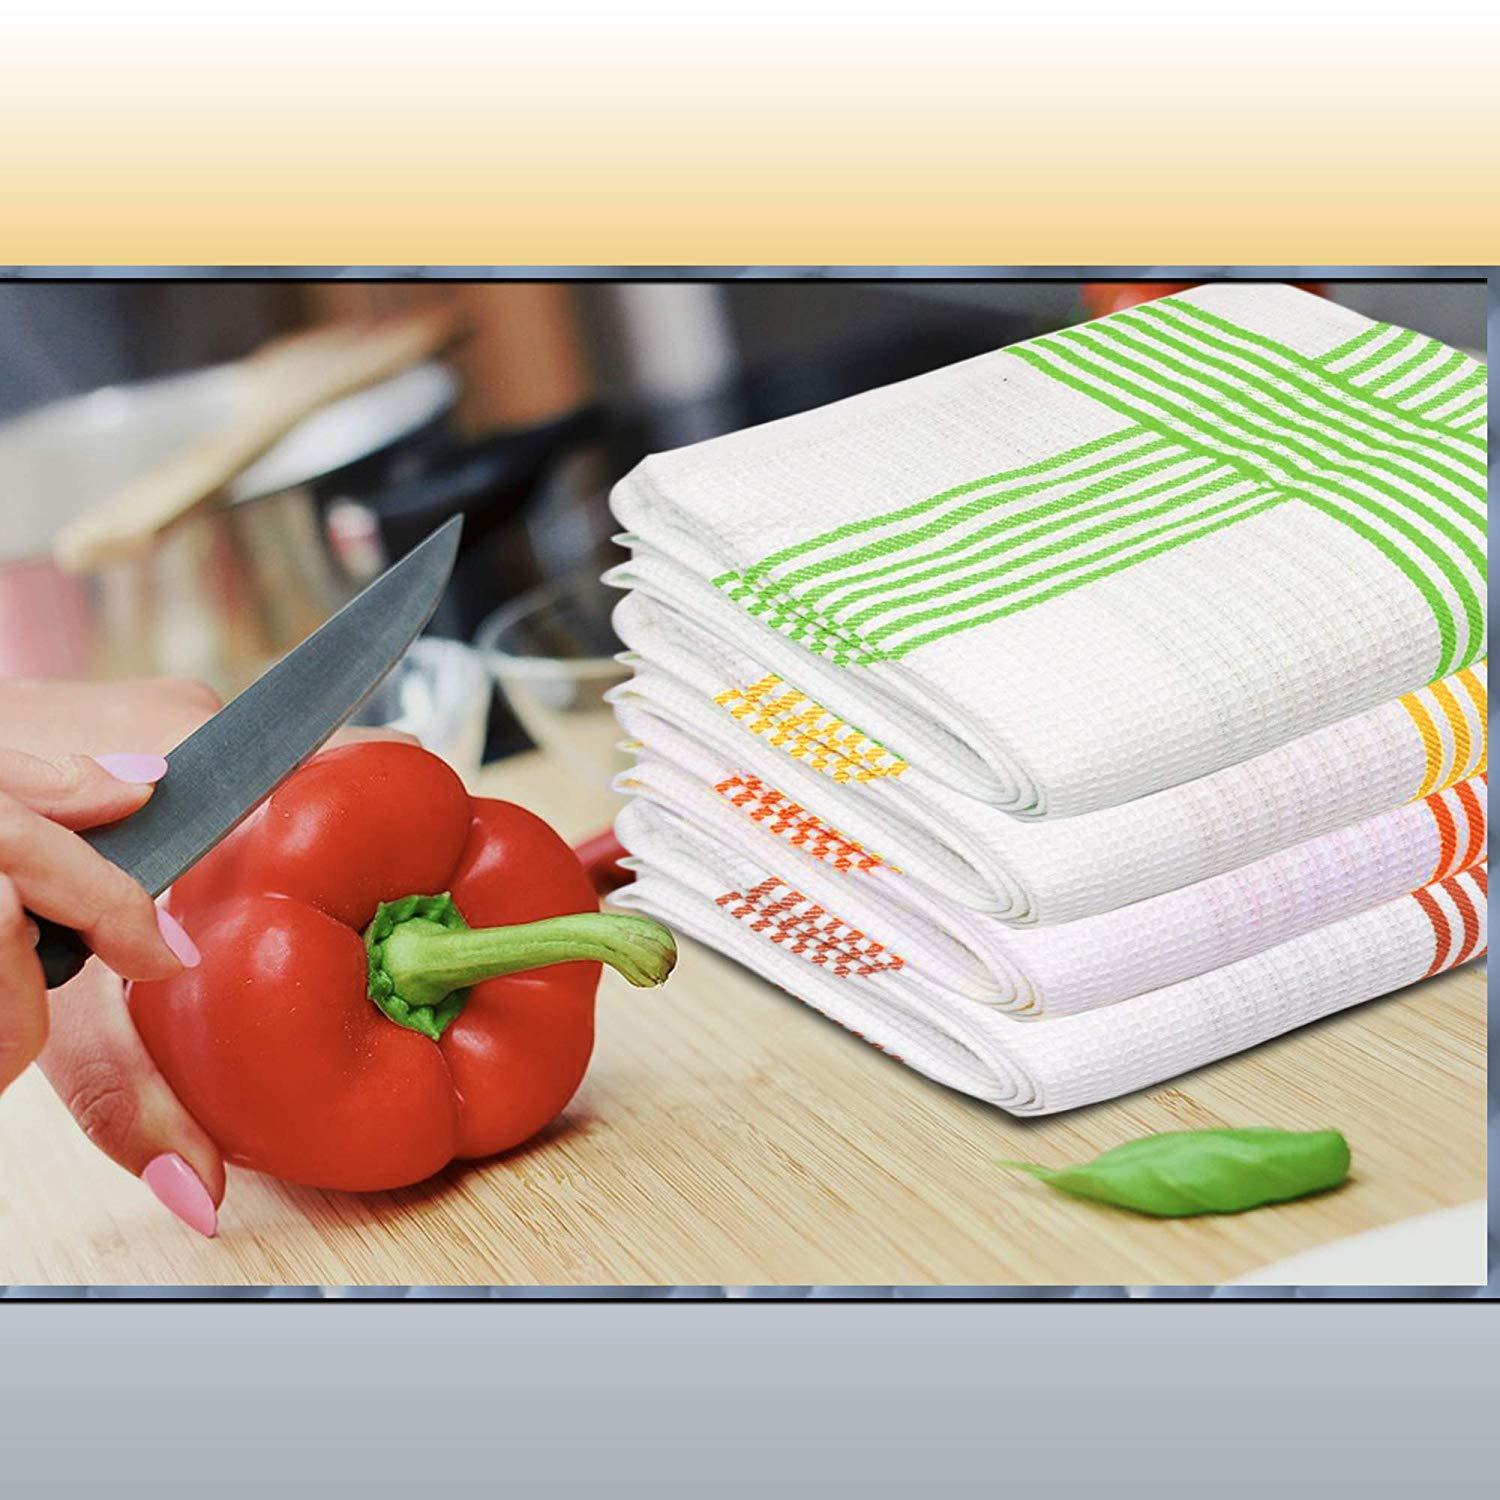 Professional Grade Commercial Herringbone Waffle Weave Towels 50x70cm - Towelogy